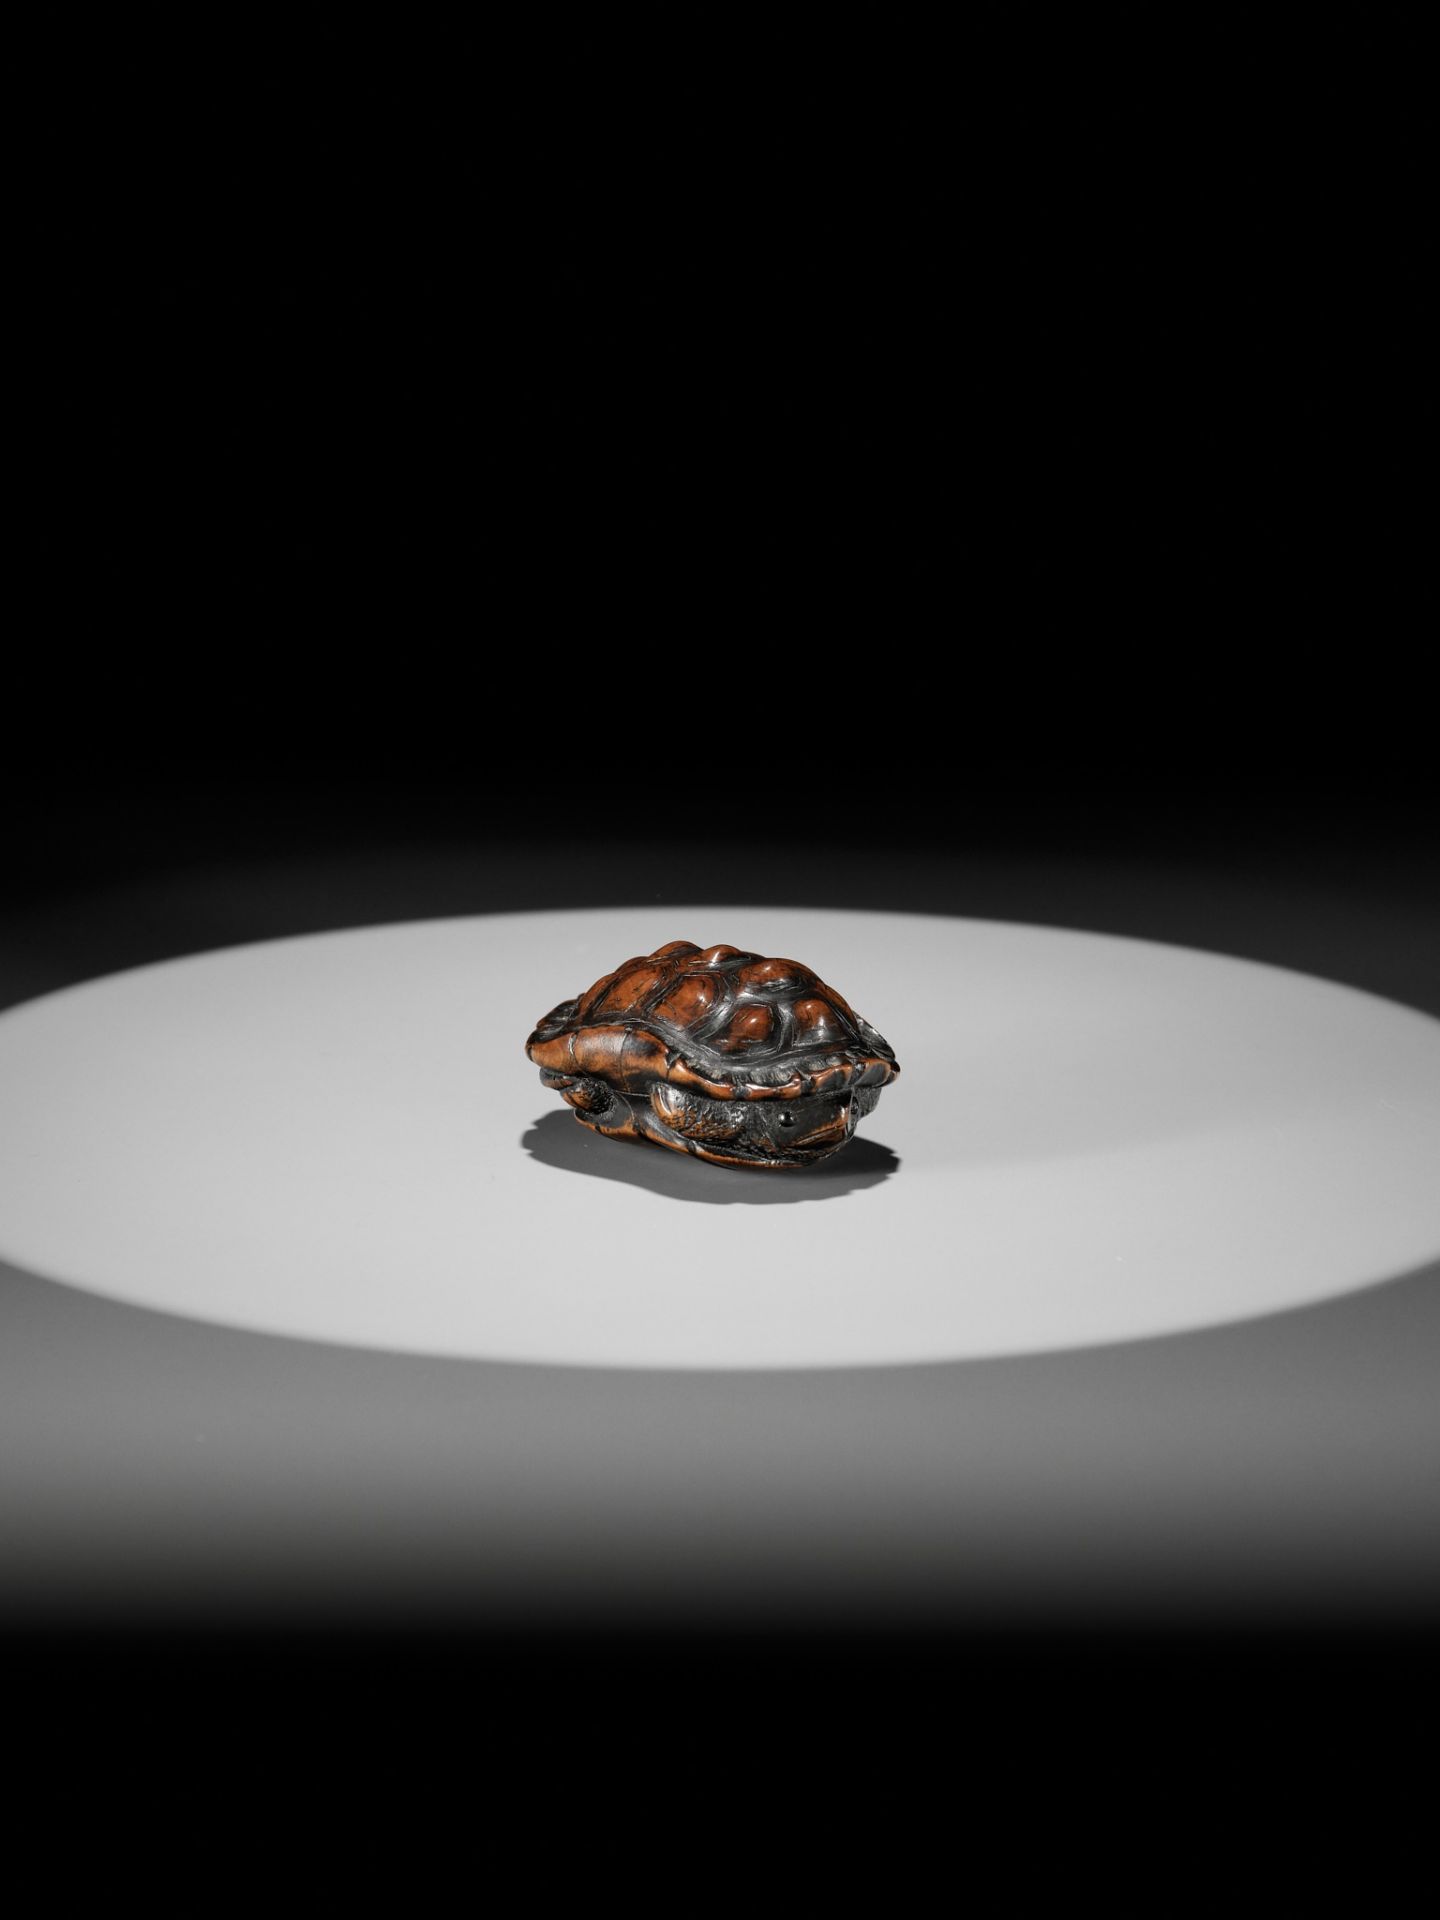 TOYOMASA: A SUPERB WOOD NETSUKE OF A TORTOISE - Image 3 of 18